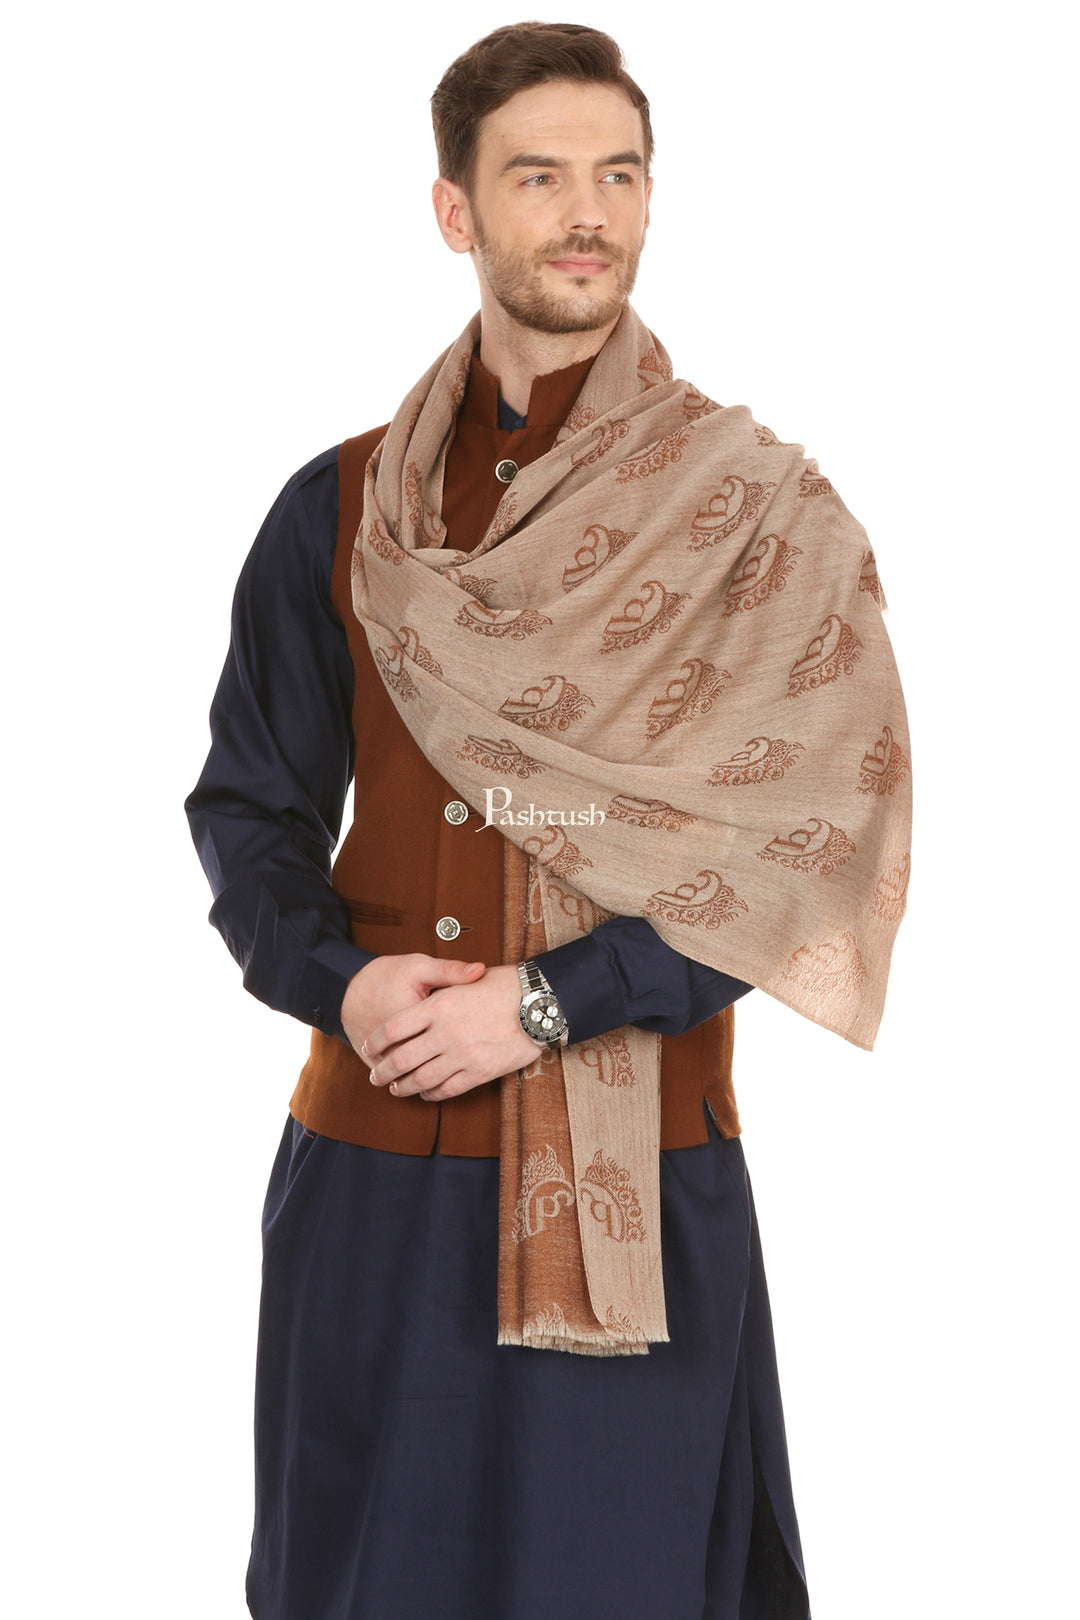 Pashtush India Mens Scarves Stoles and Mufflers Pashtush Woven Mens Fine Wool Signature Mens Muffler, Warm Cashmere Feel